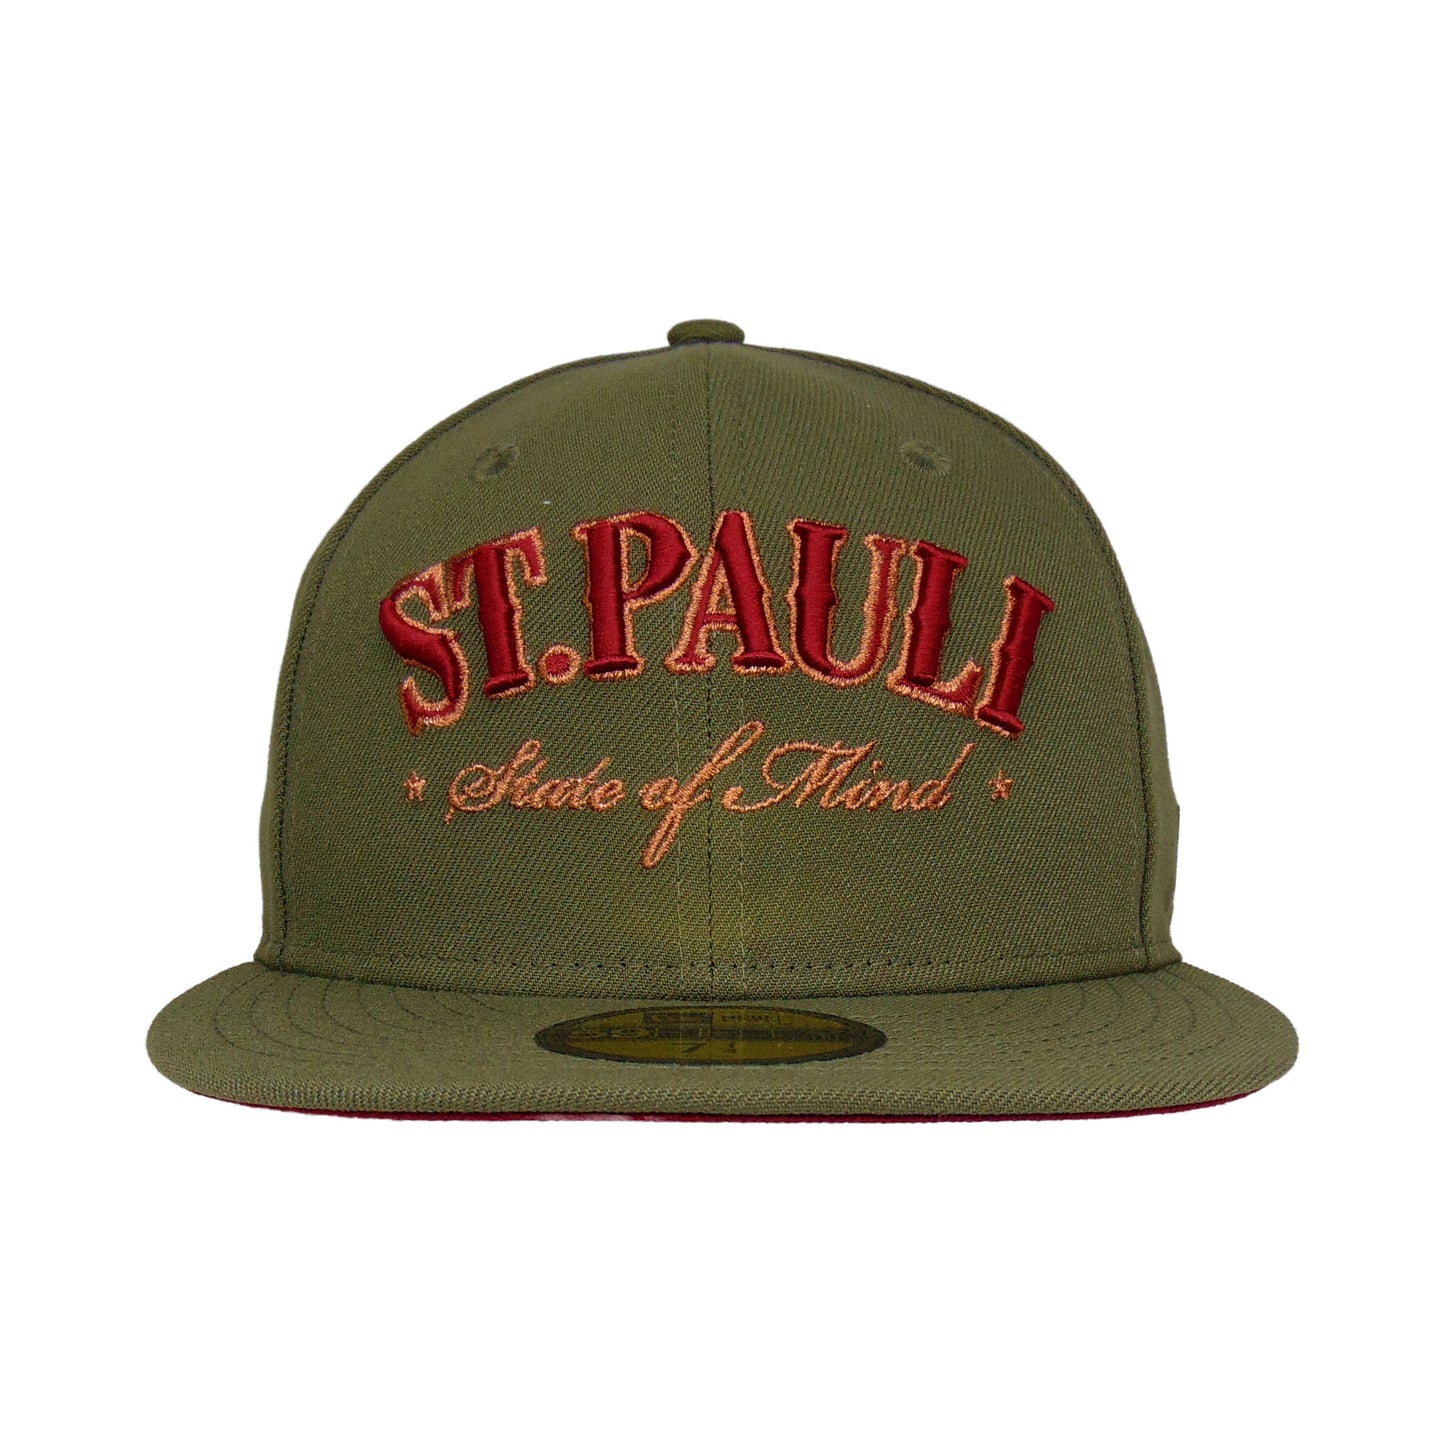 St. Pauli JF Exclusive New Era 59FIFTY Cap New Olive